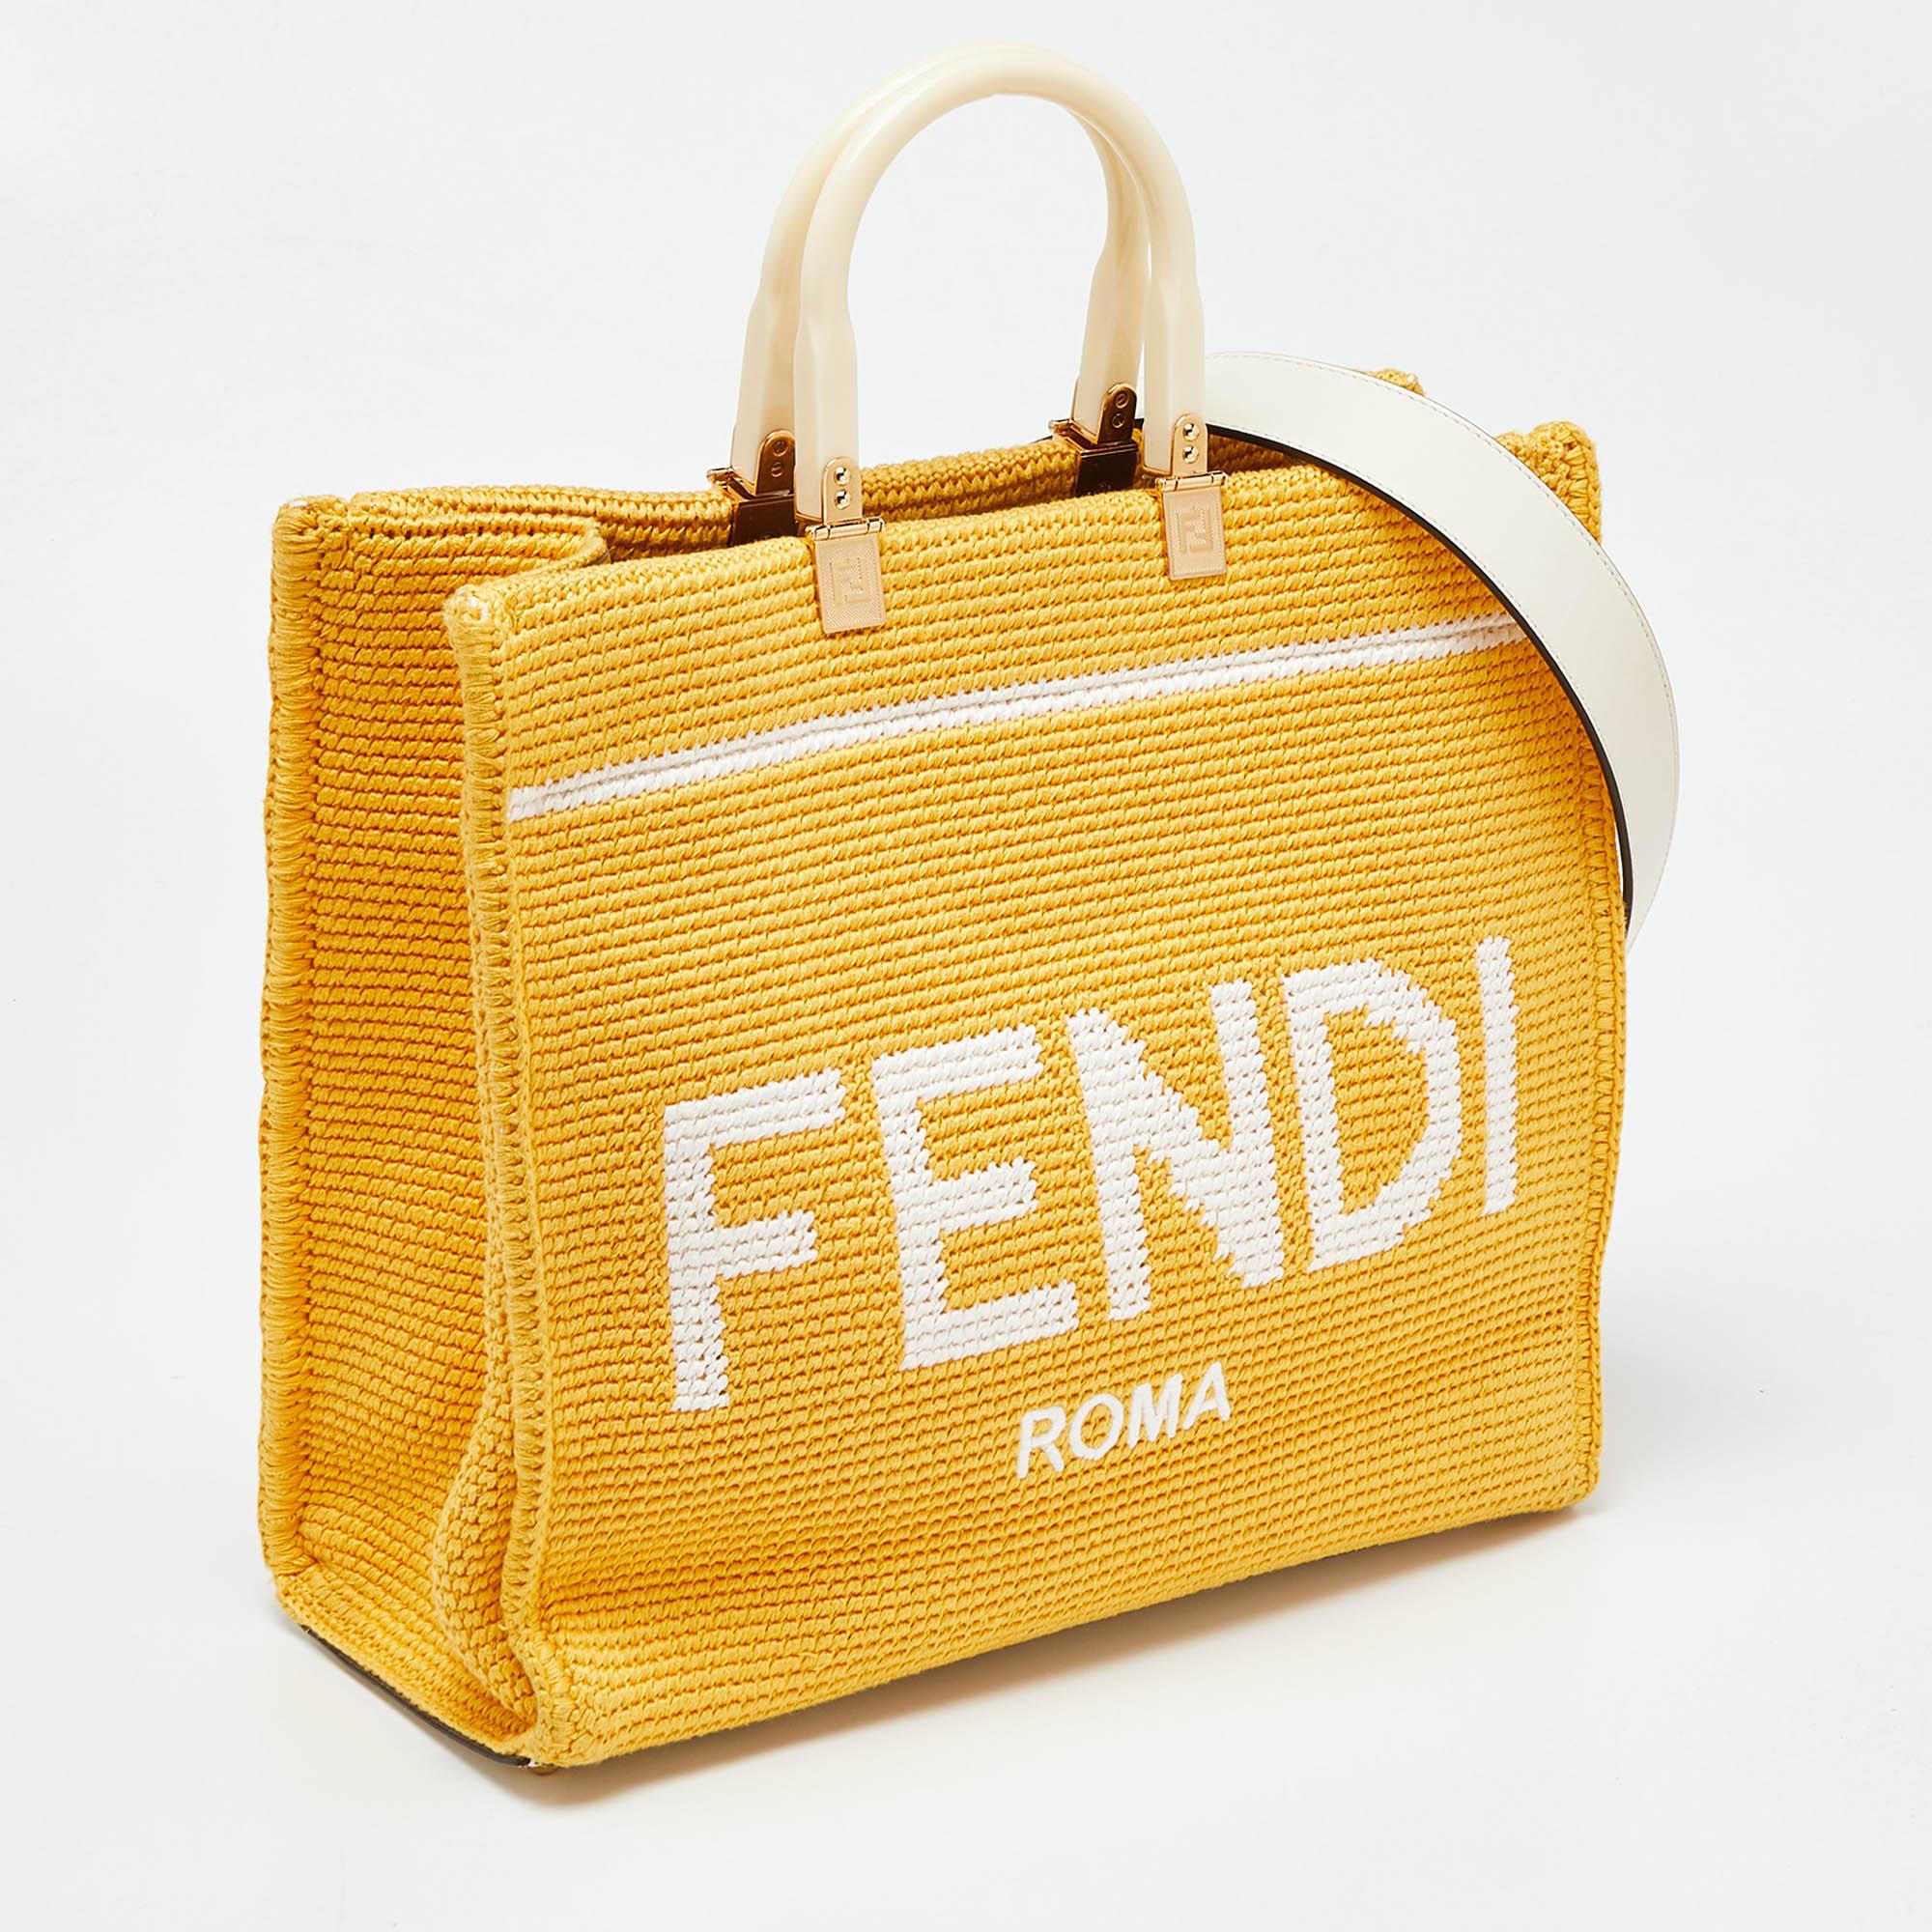 Fendi Yellow/White Crochet and Leather Medium Sunshine Tote For Sale 3